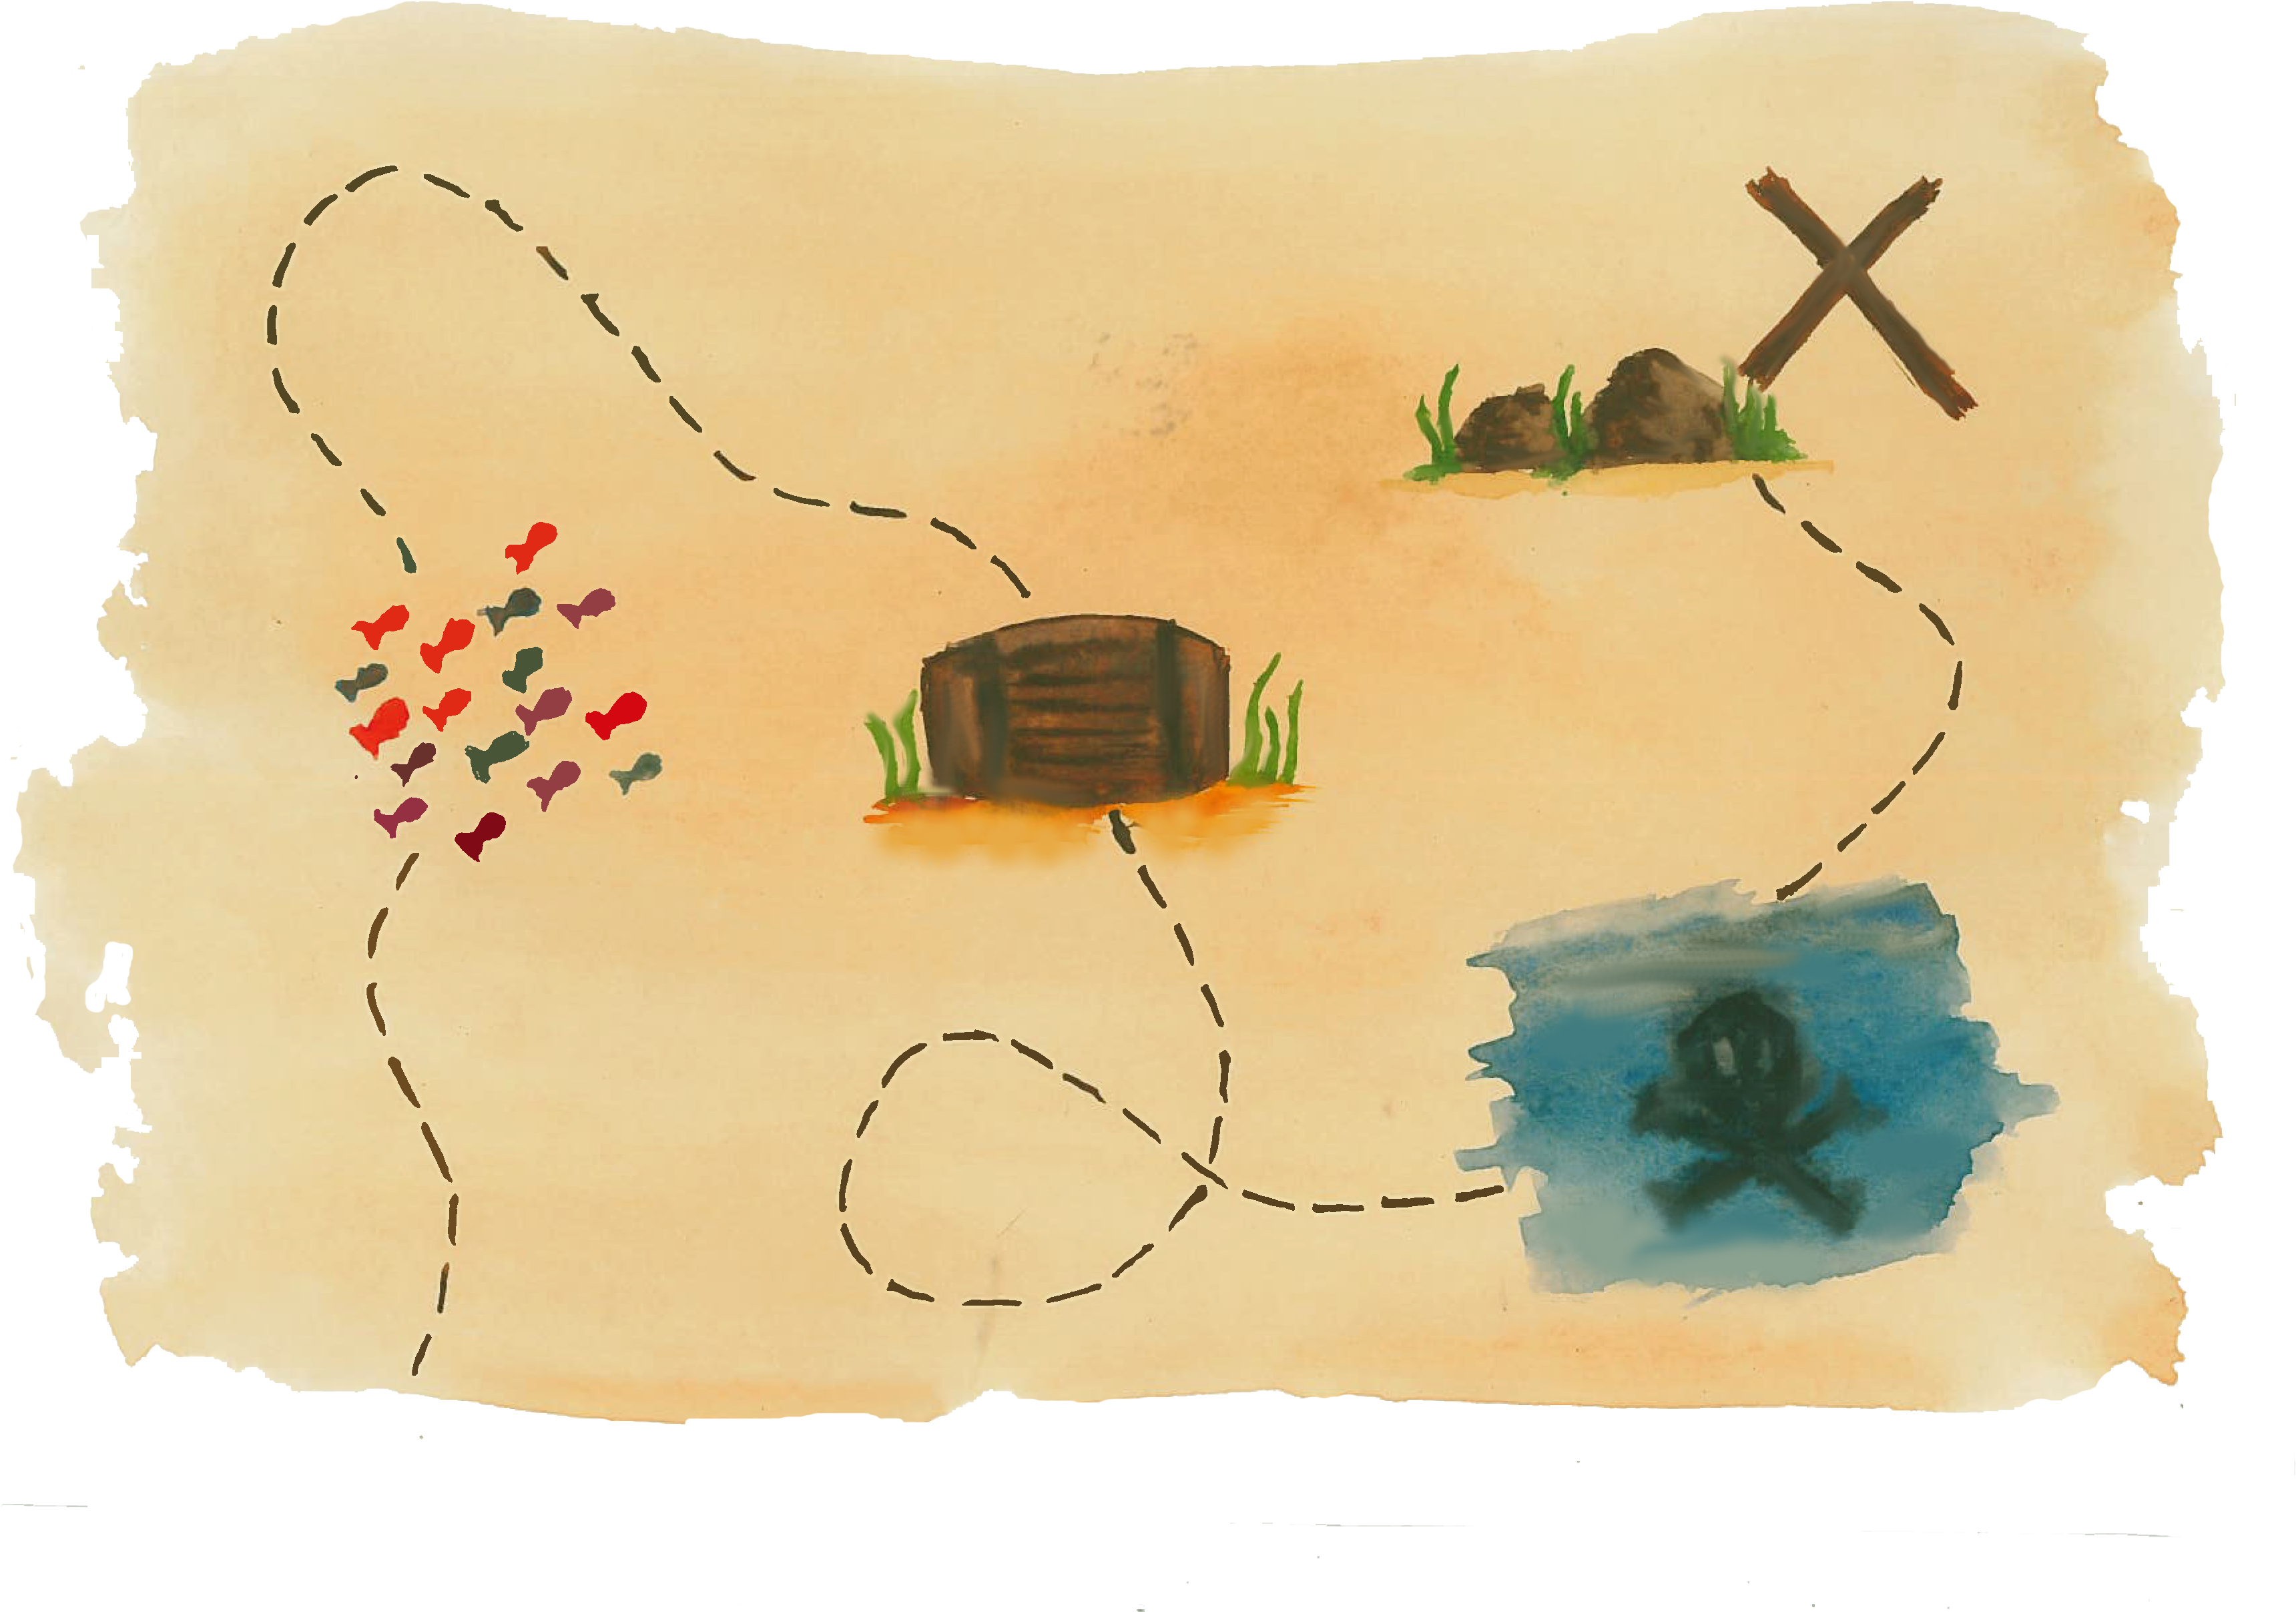 Adventure Map Background